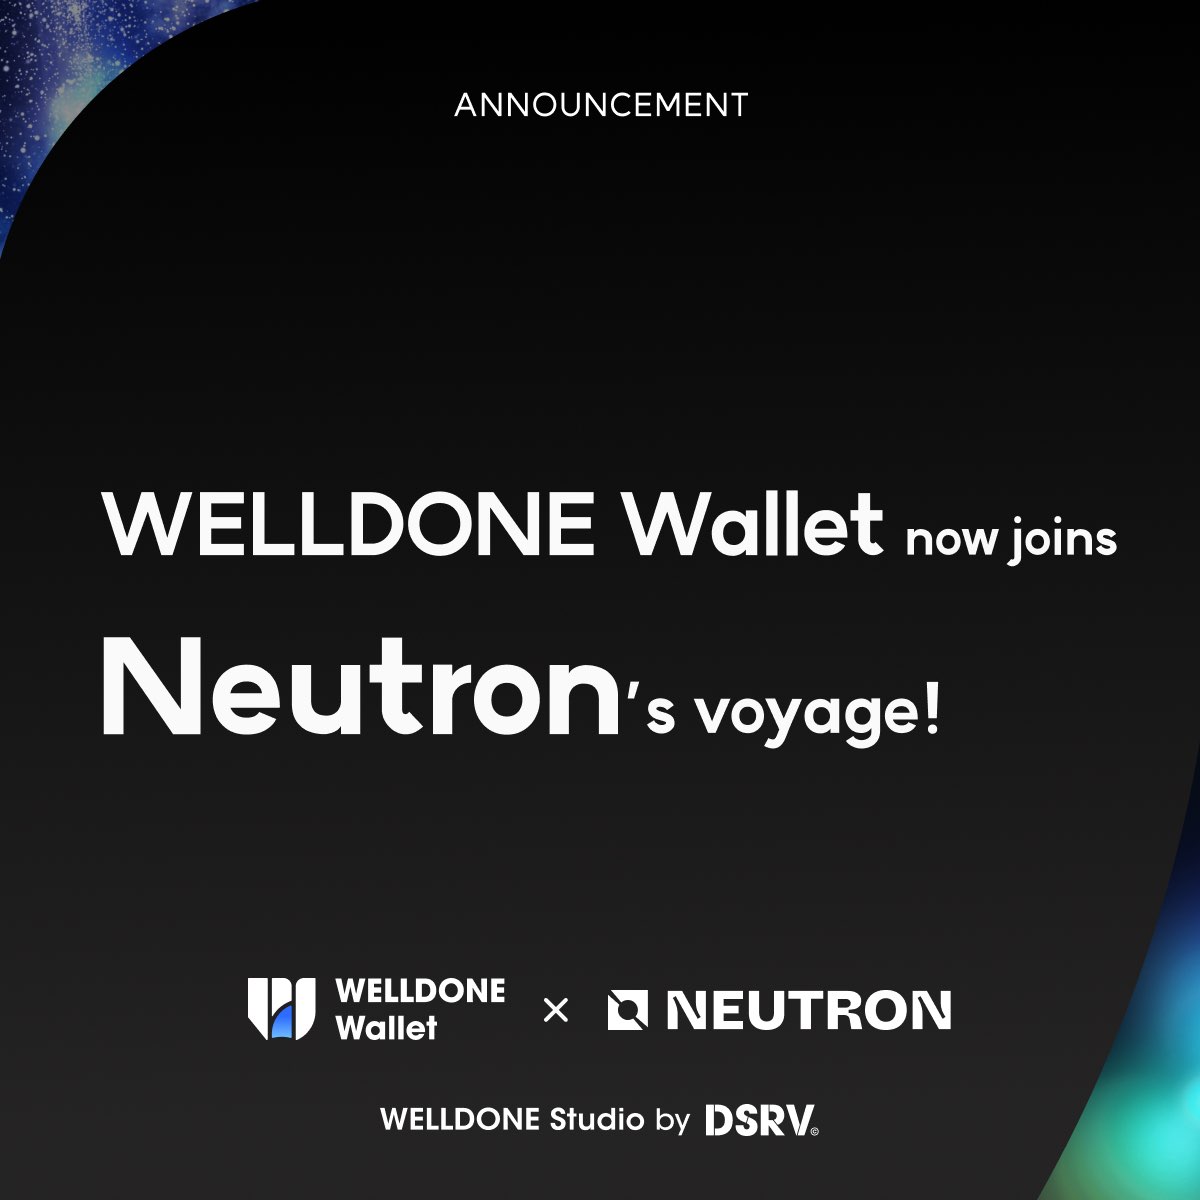 @Neutron_org joined #WELLDONEWallet,